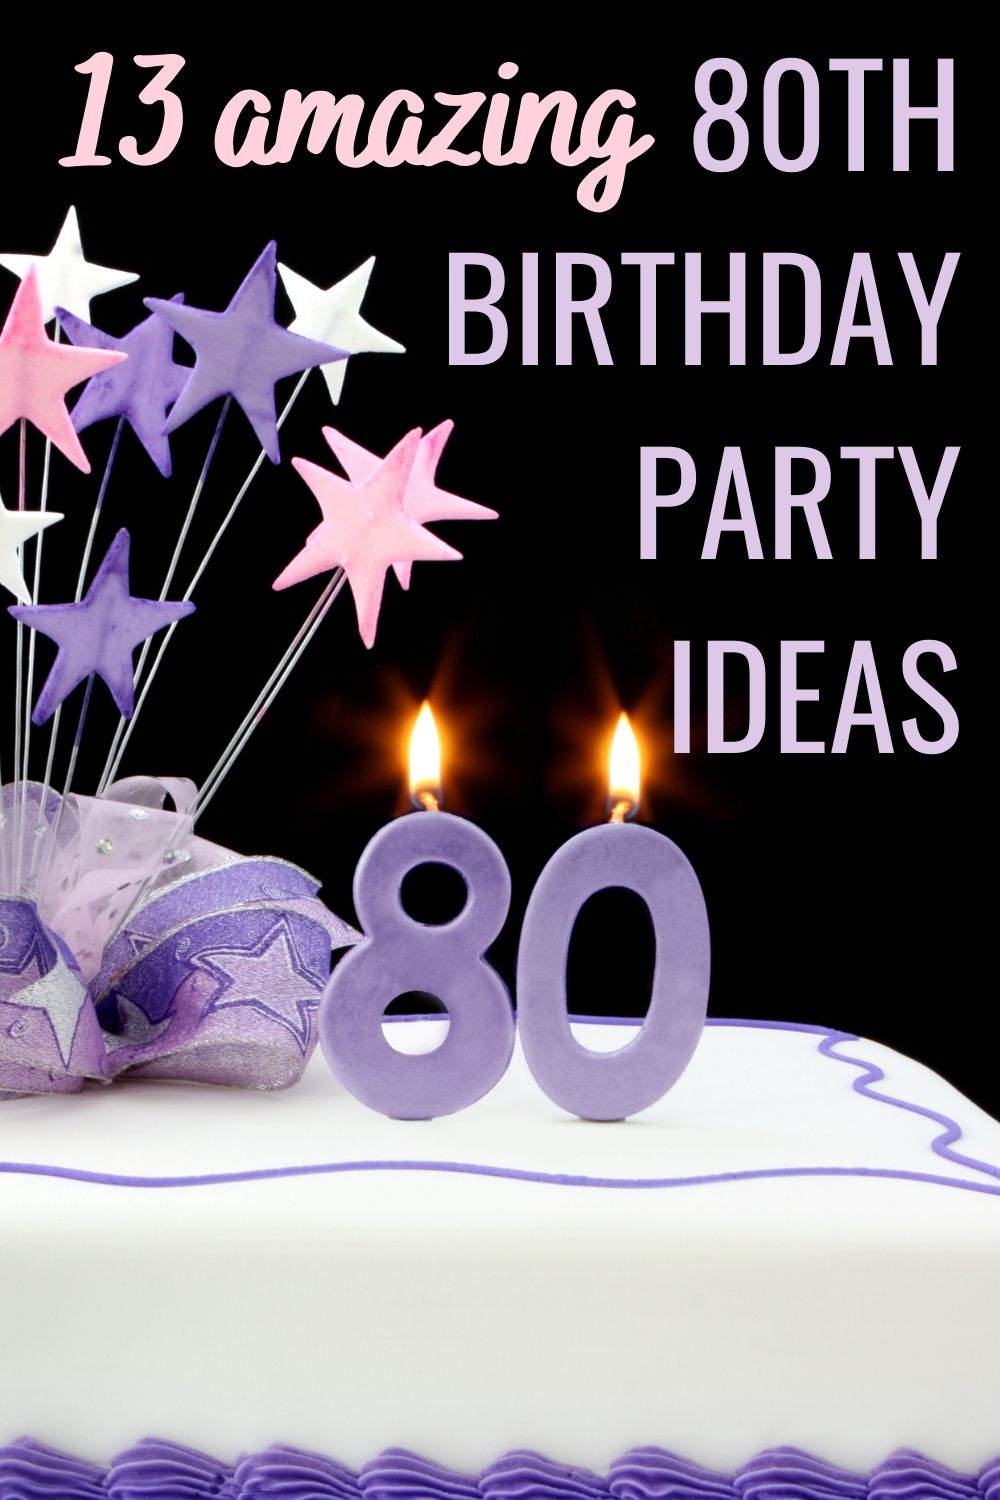 13 Amazing 80th Birthday Party Ideas - Major Birthdays